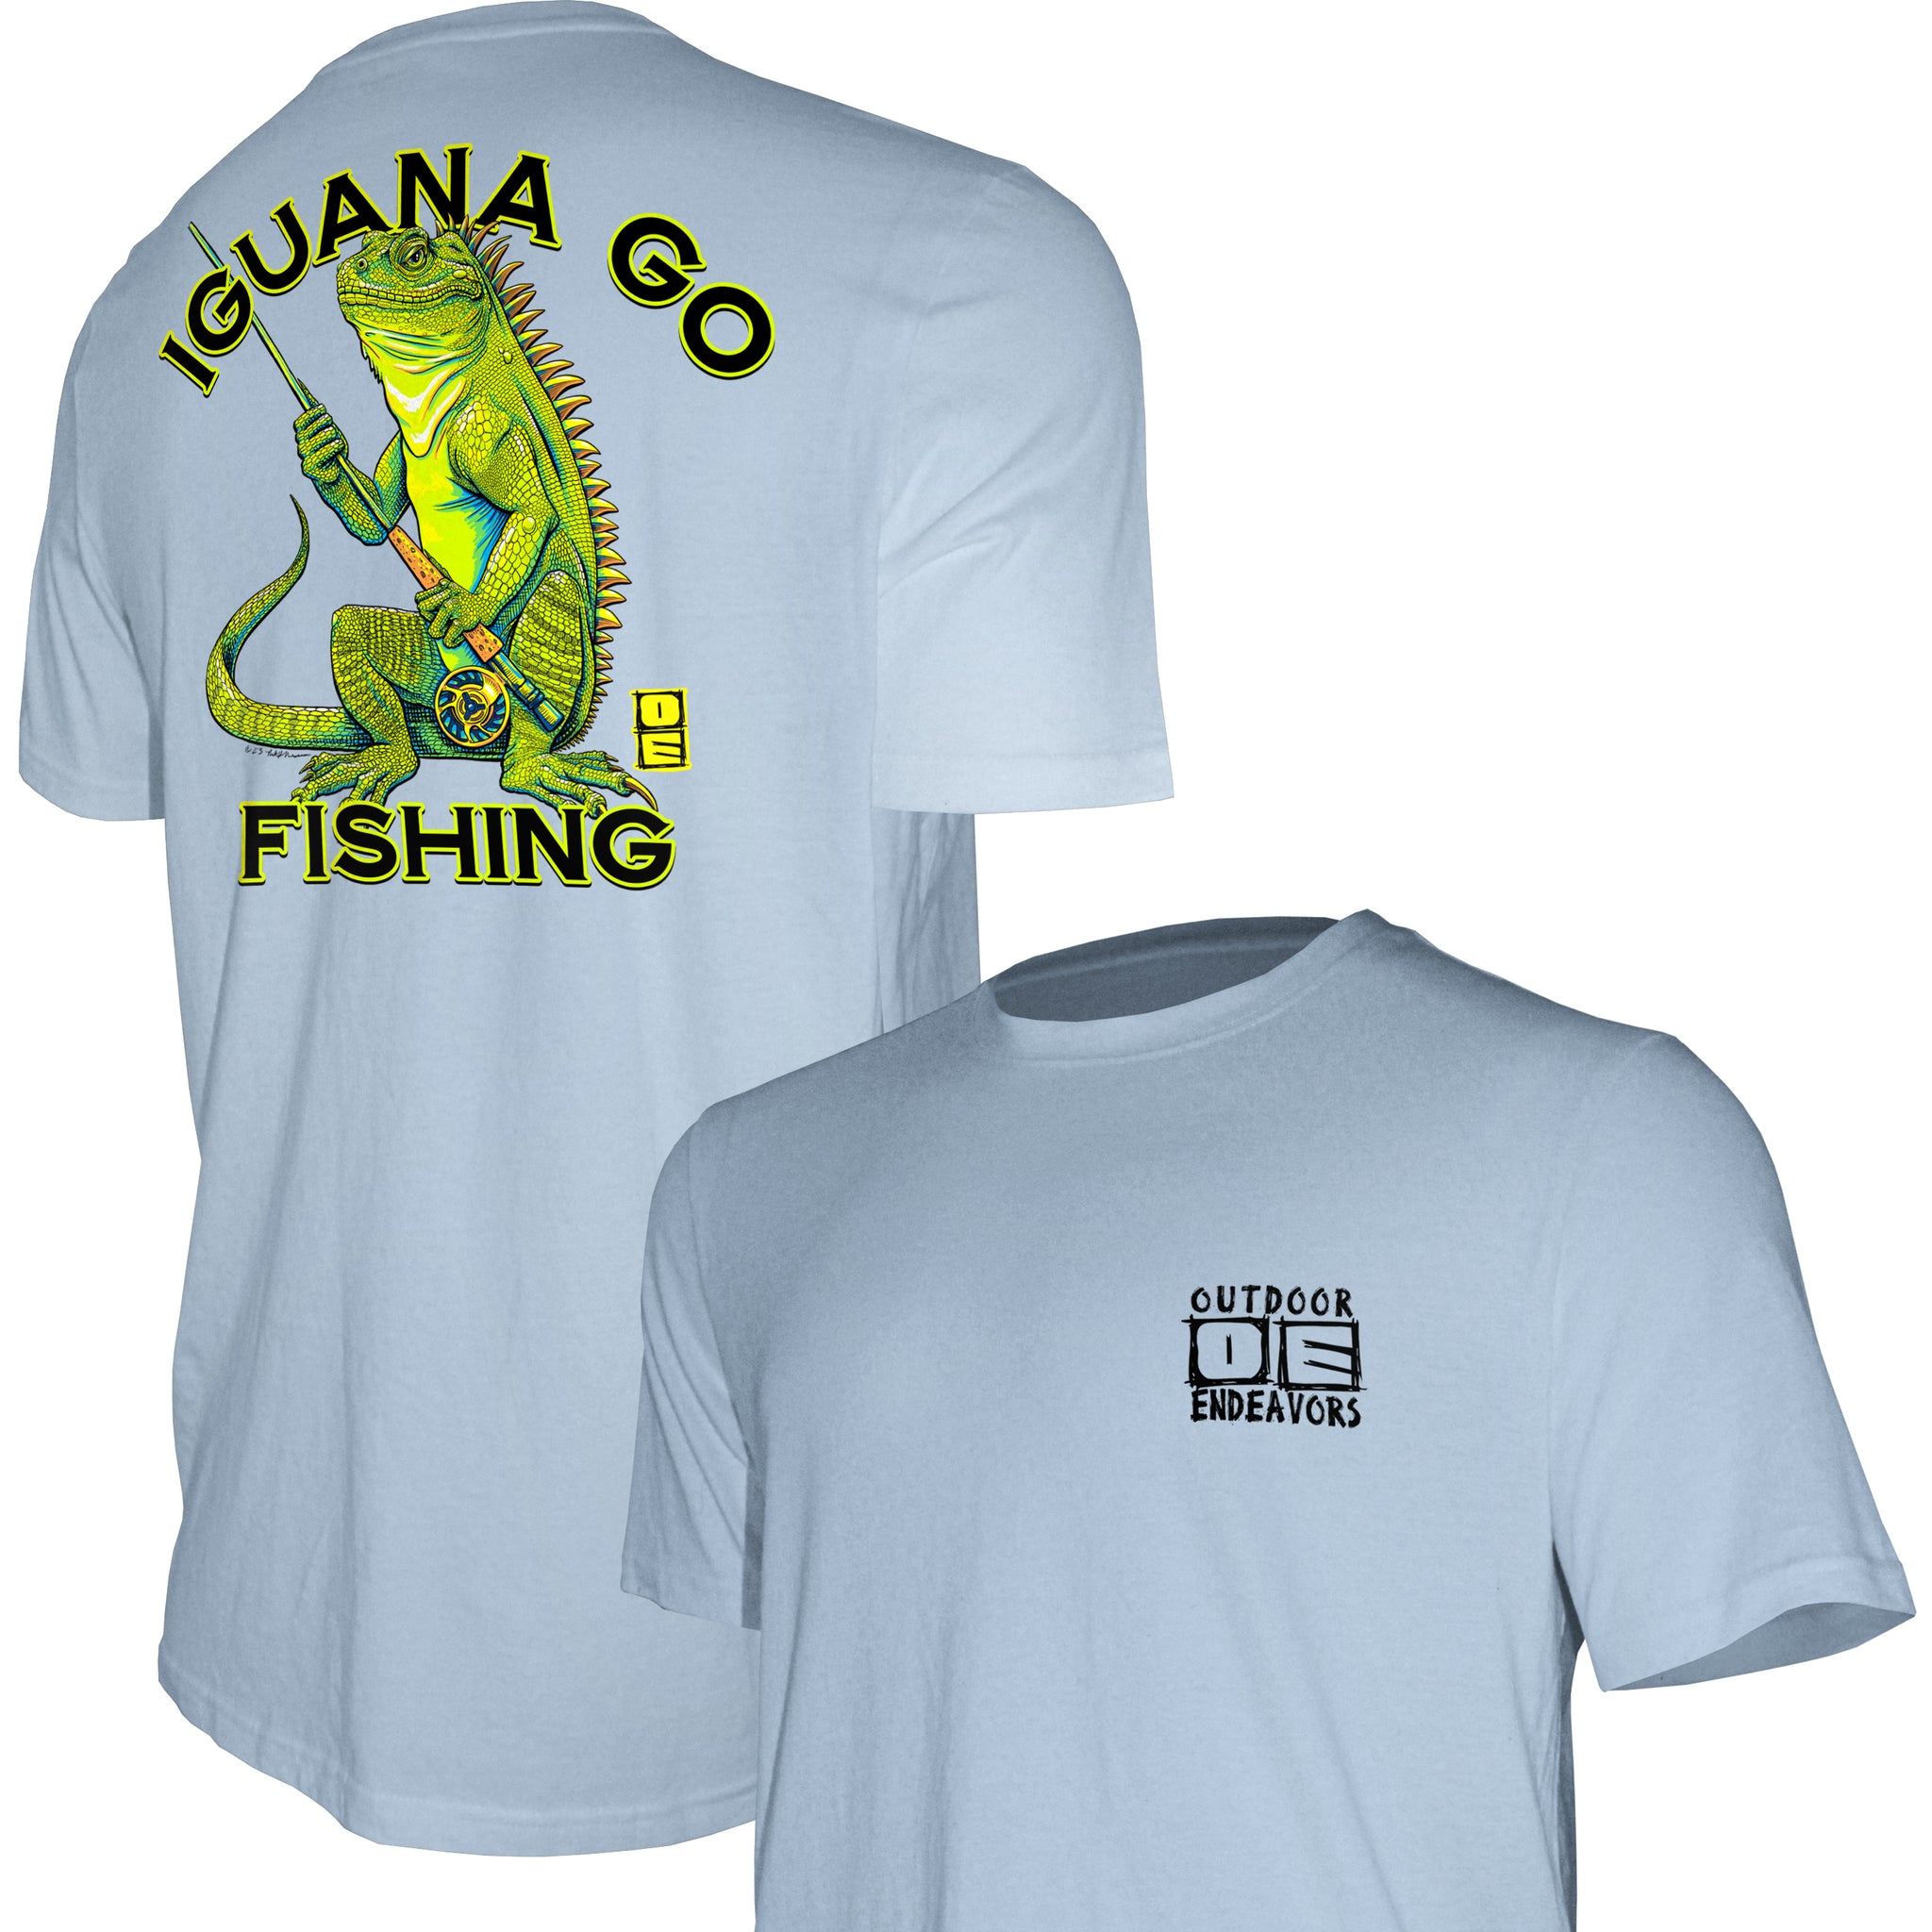 Outdoor Endeavors Attitude- American Made Tee - Iguana Go Fishing Large / Light Blue